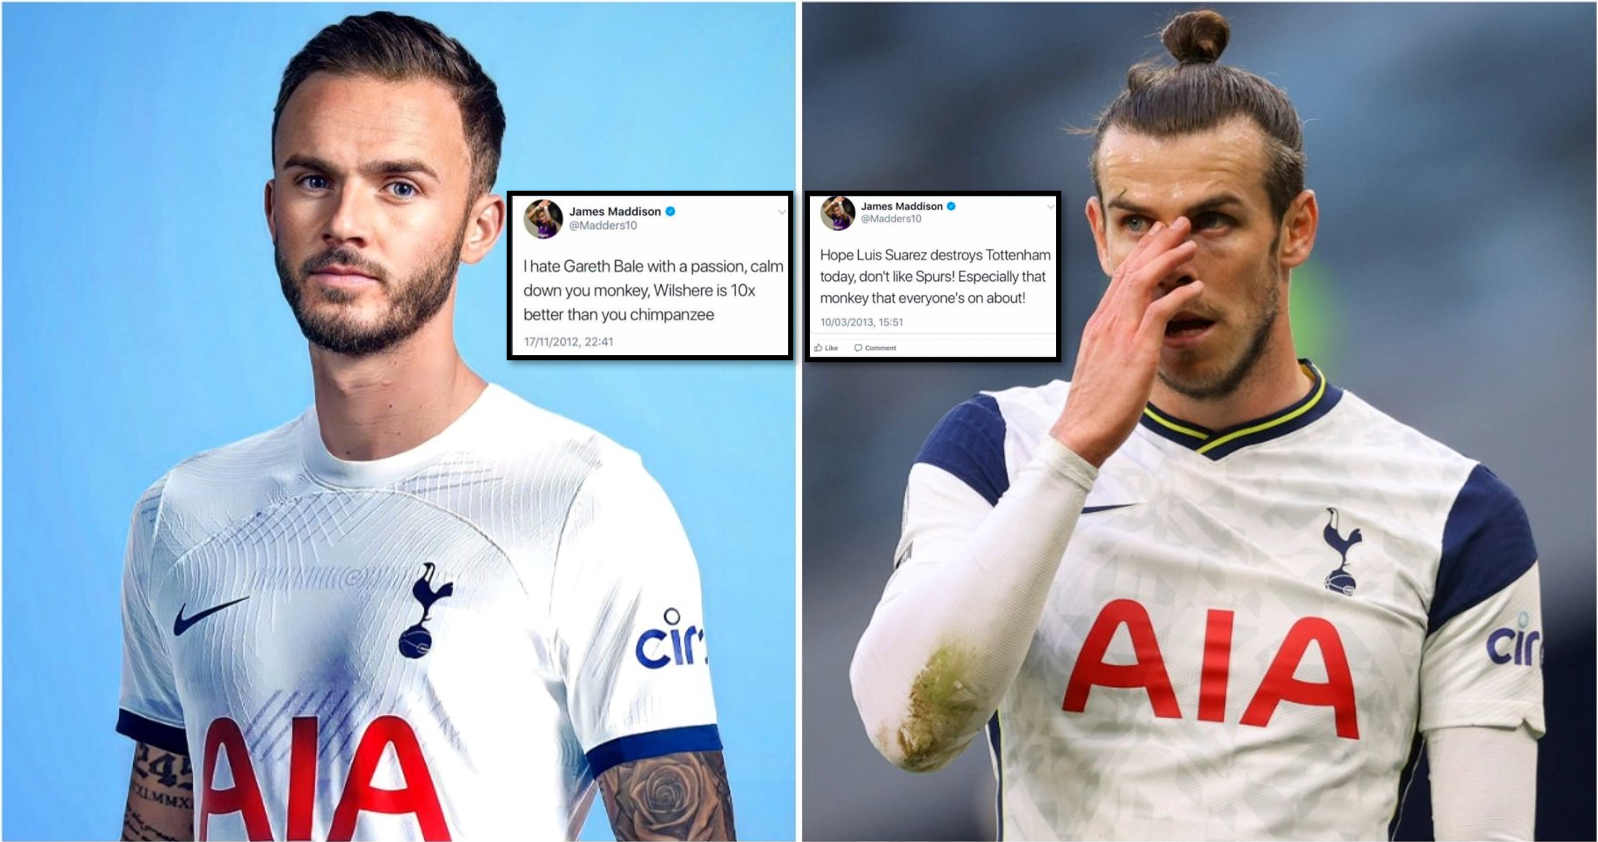 James Maddison deletes don't like Spurs, hate Gareth Bale tweets as  Tottenham transfer nears